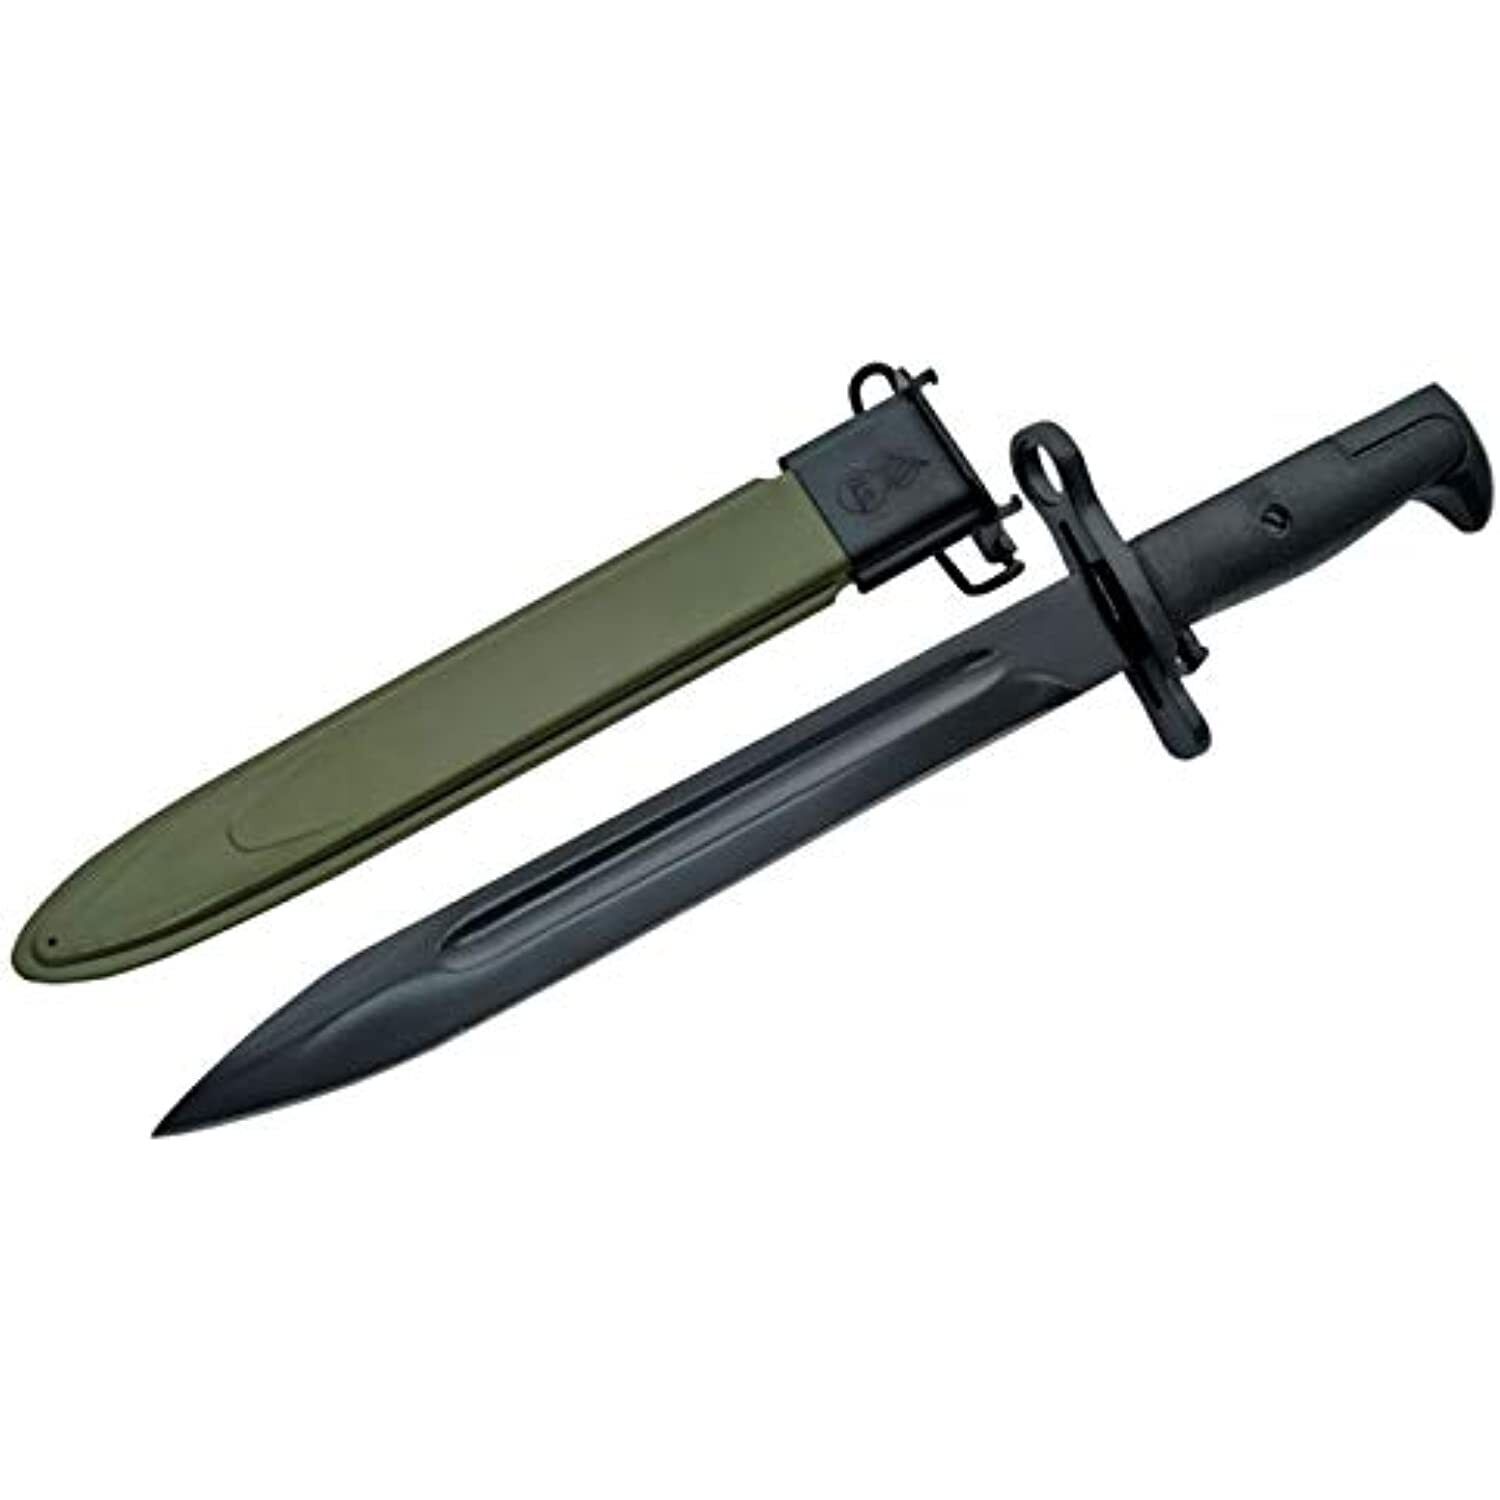 M1 Bayonet Military Knife,Army,Marines